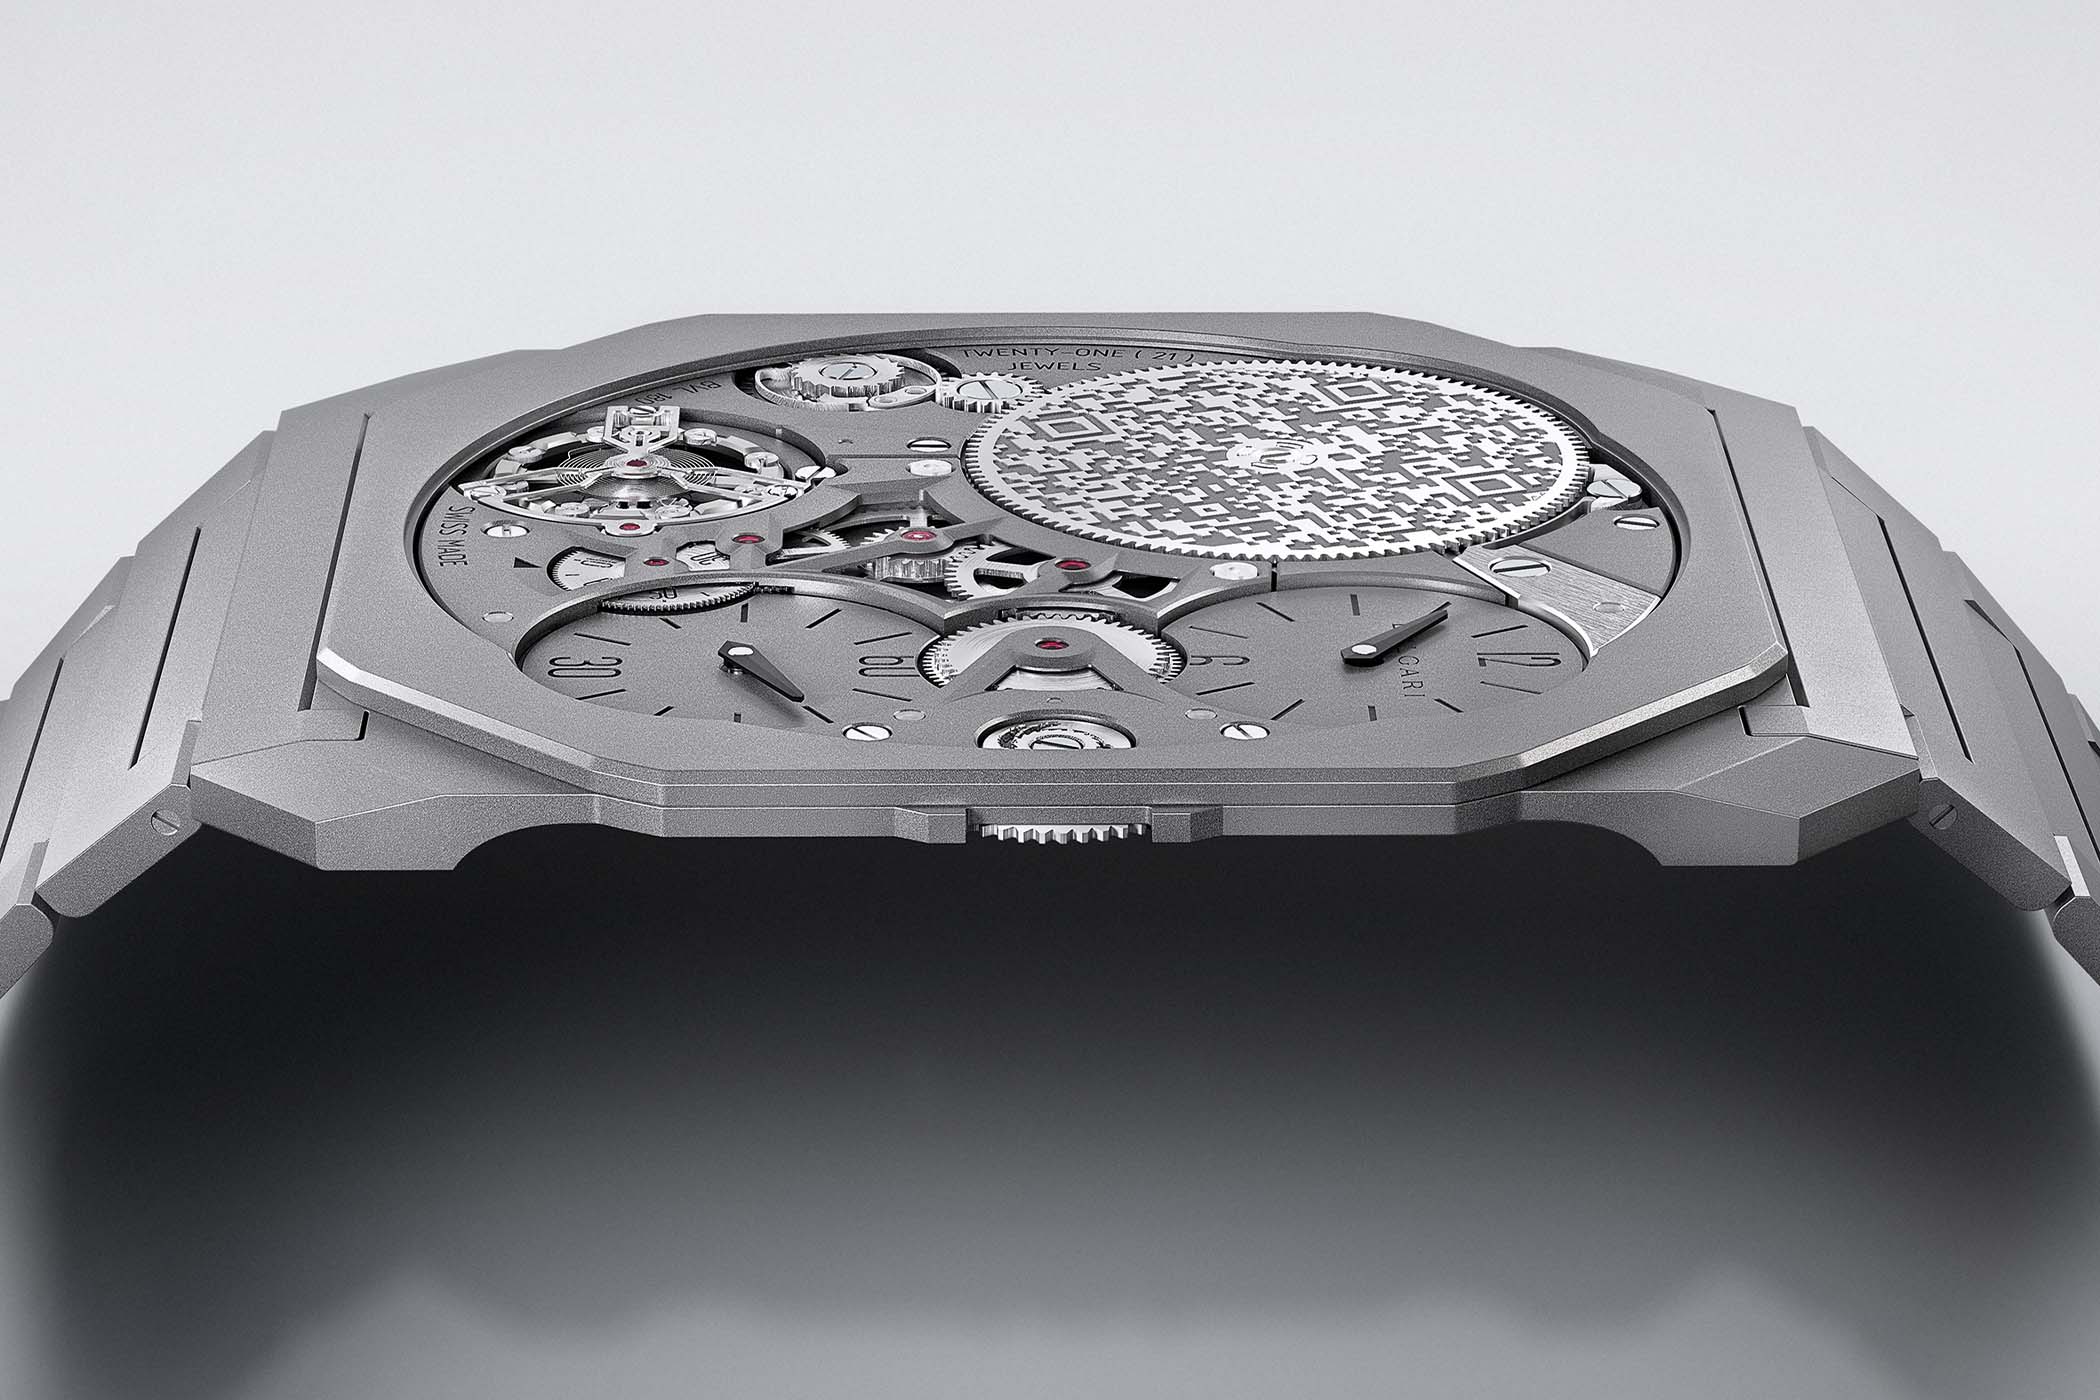 Bulgari Octo Finissimo Ultra - World's Thinnest Mechanical Watch